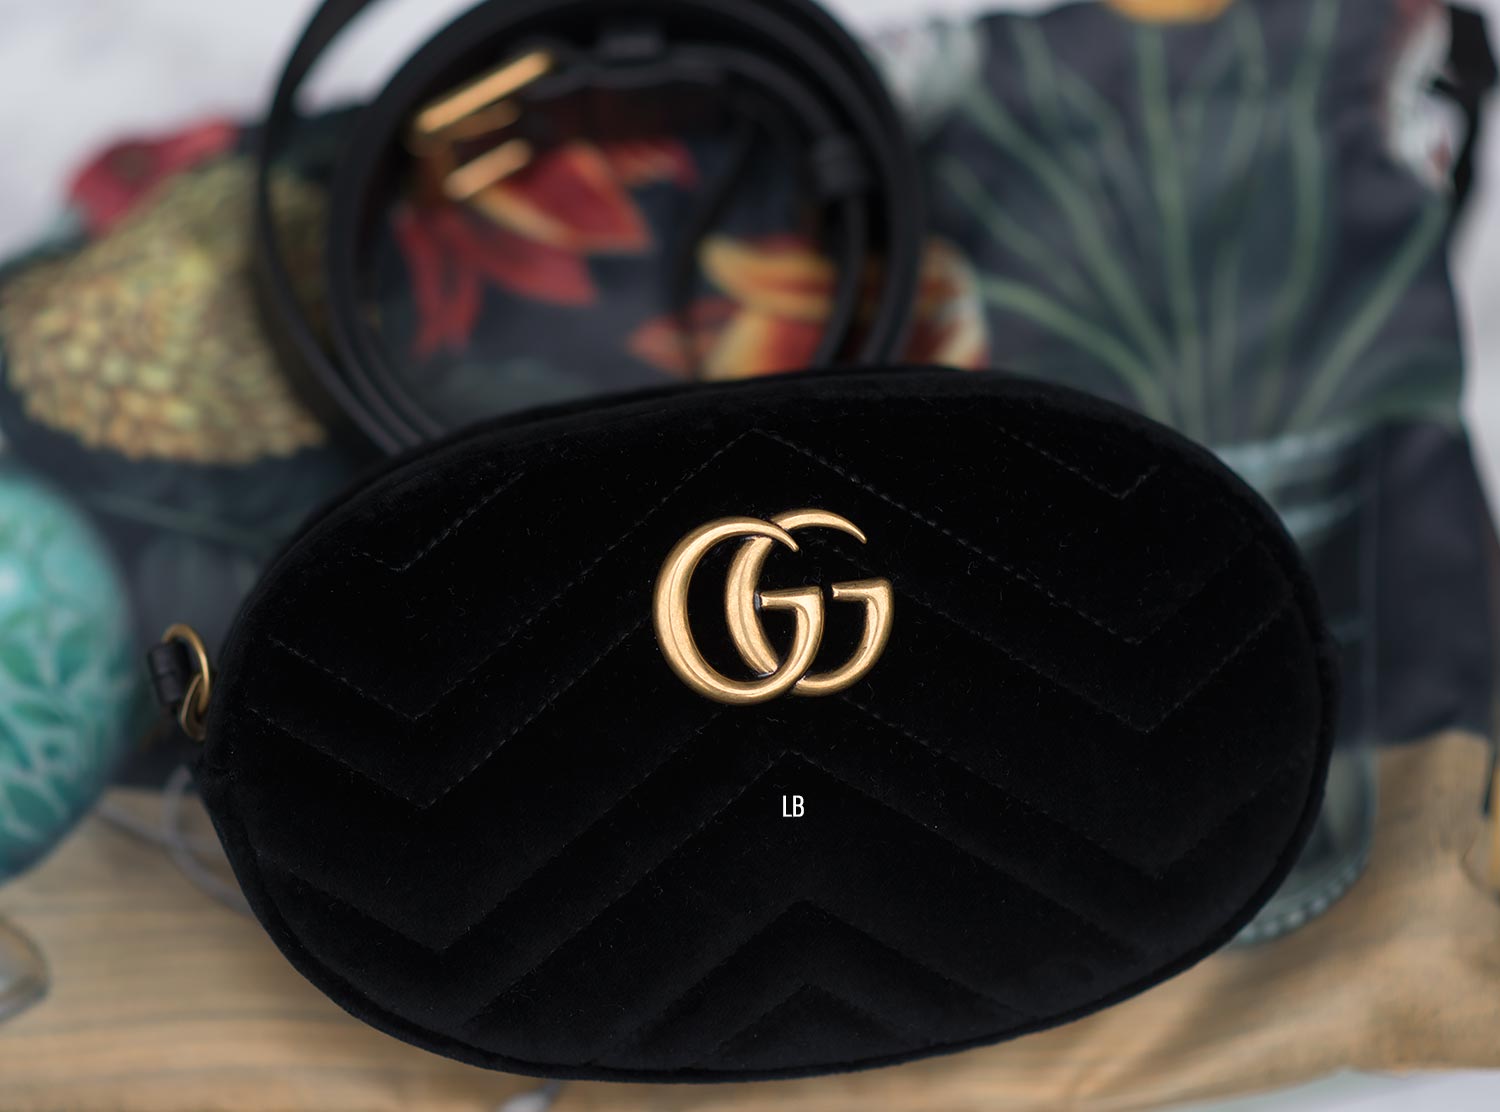 Gucci GG Marmont Velvet Mini Bag Review - FORD LA FEMME